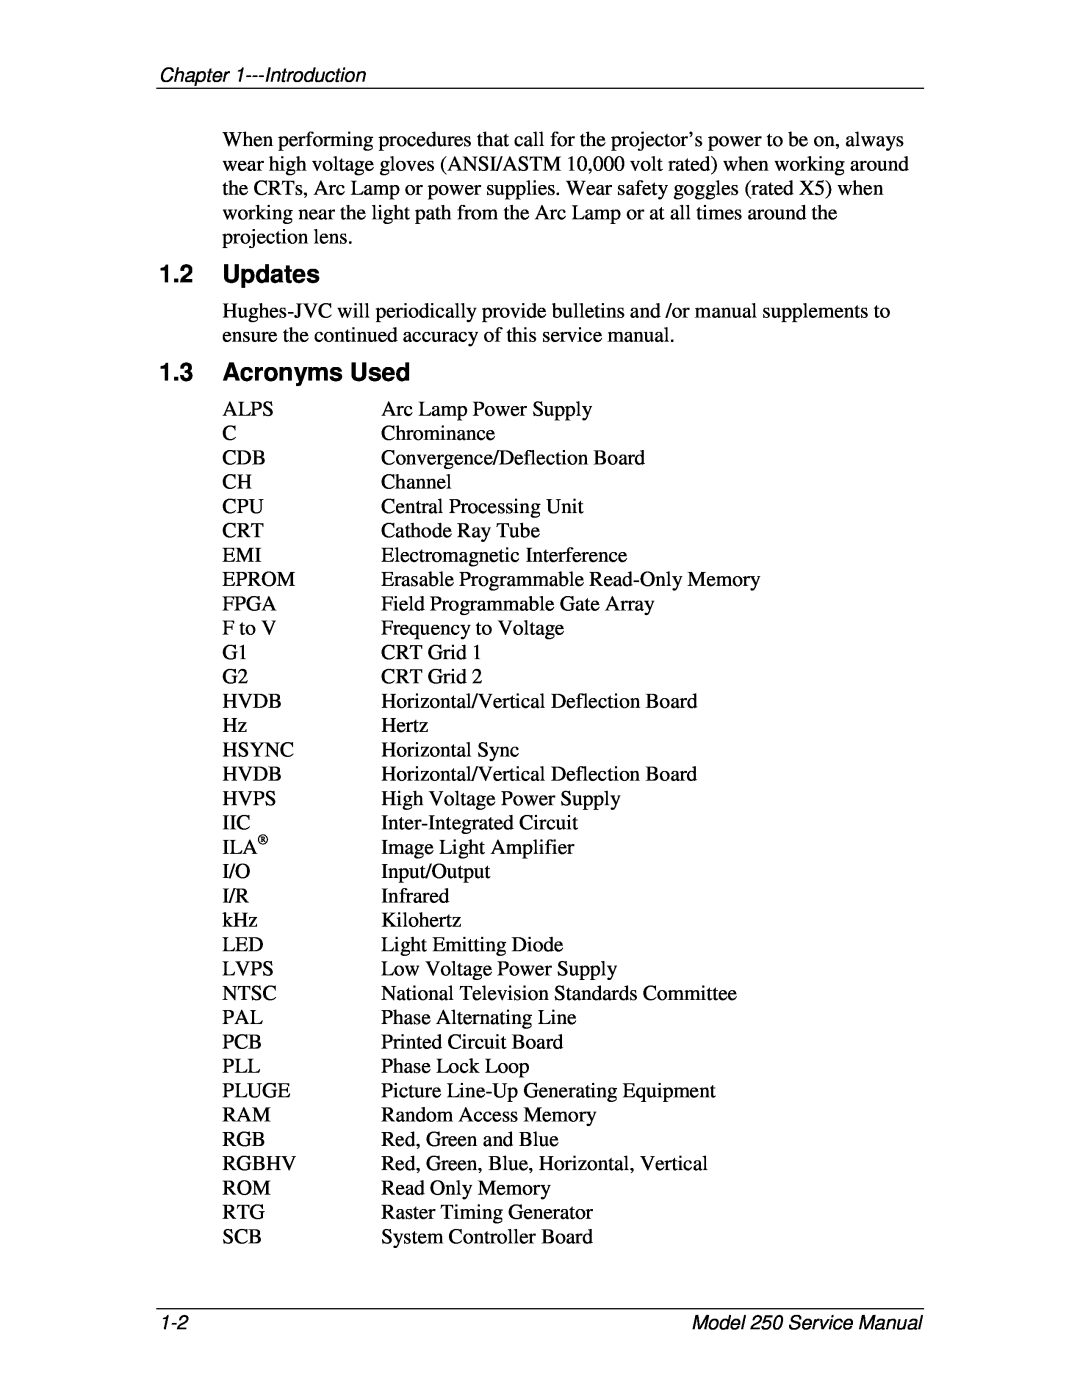 JVC 250 service manual Updates, Acronyms Used 